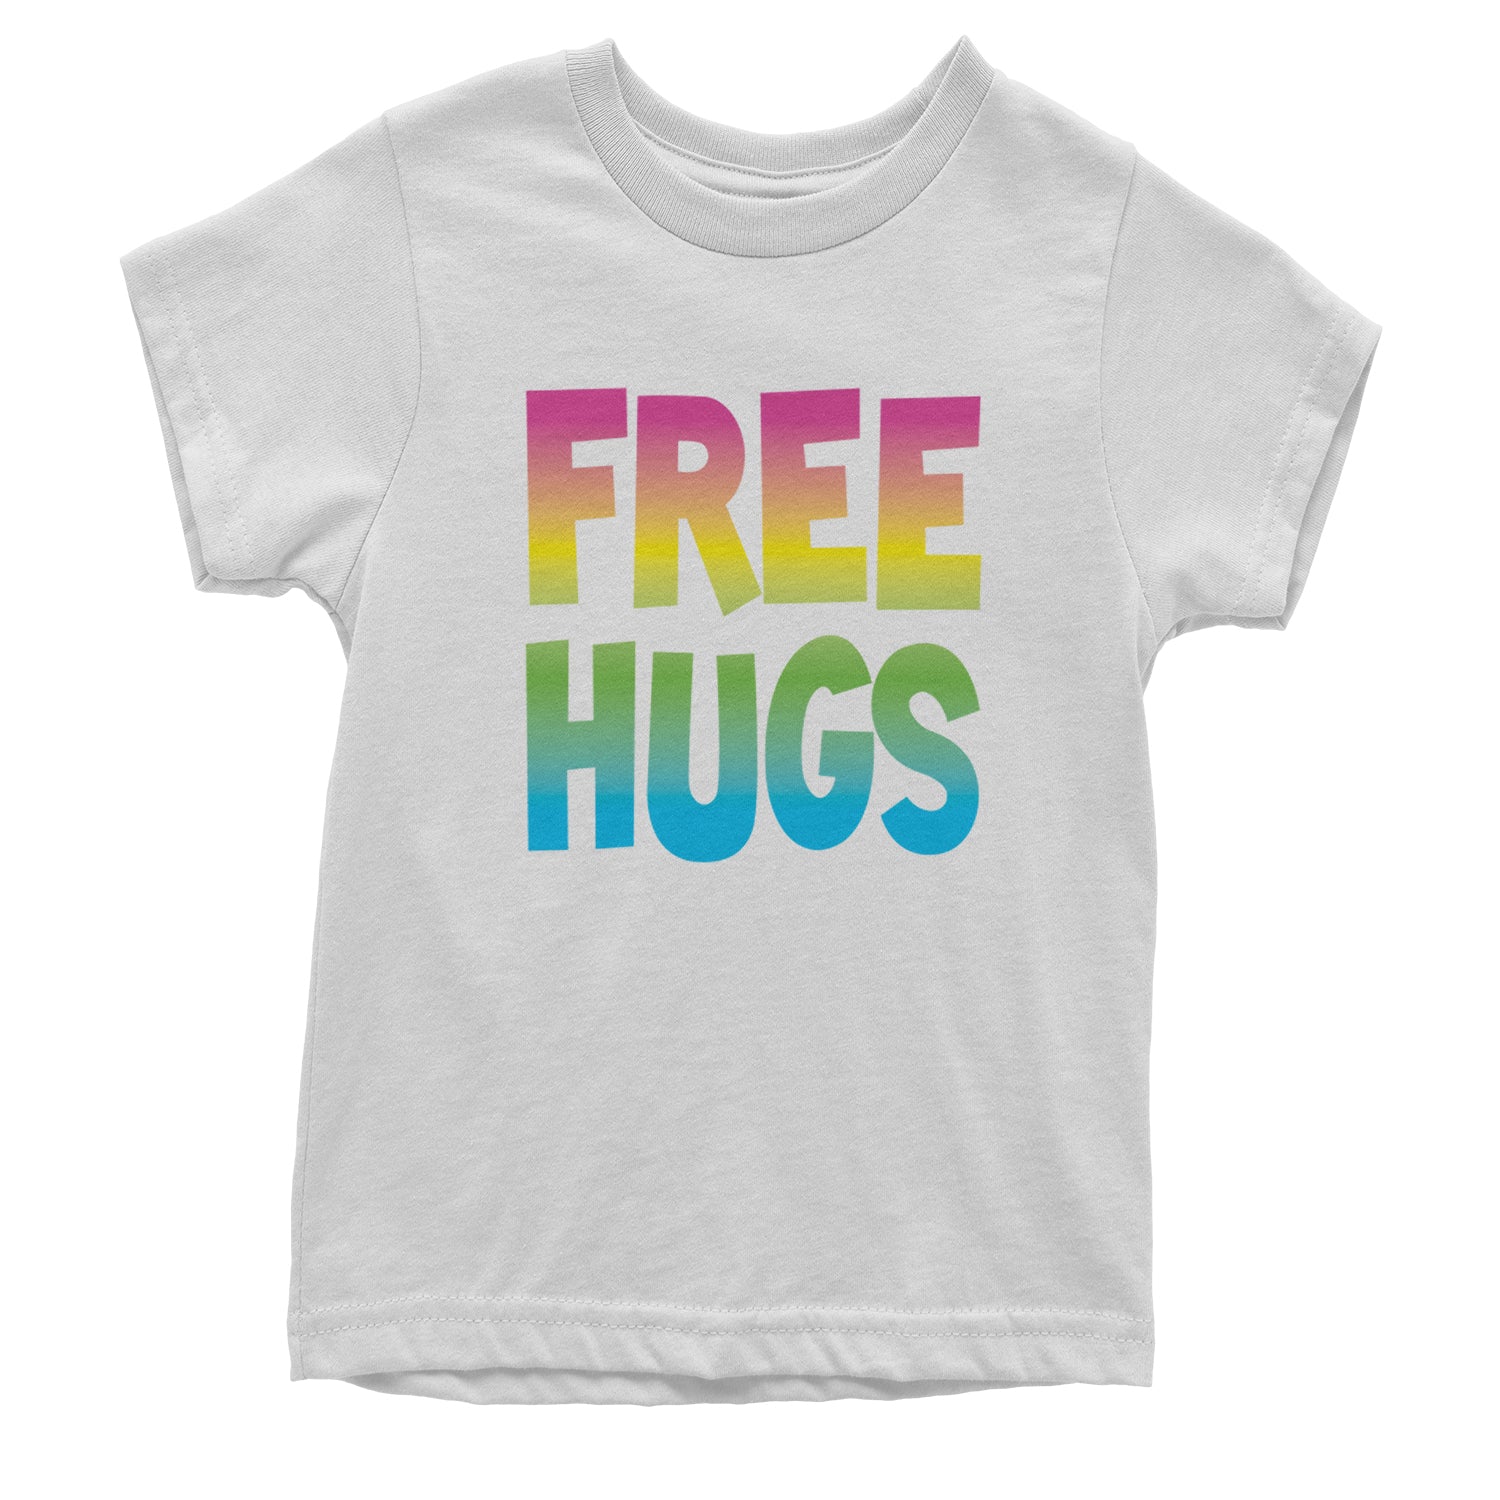 Free Hugs Youth T-shirt free, hugger, hugging, hugs by Expression Tees